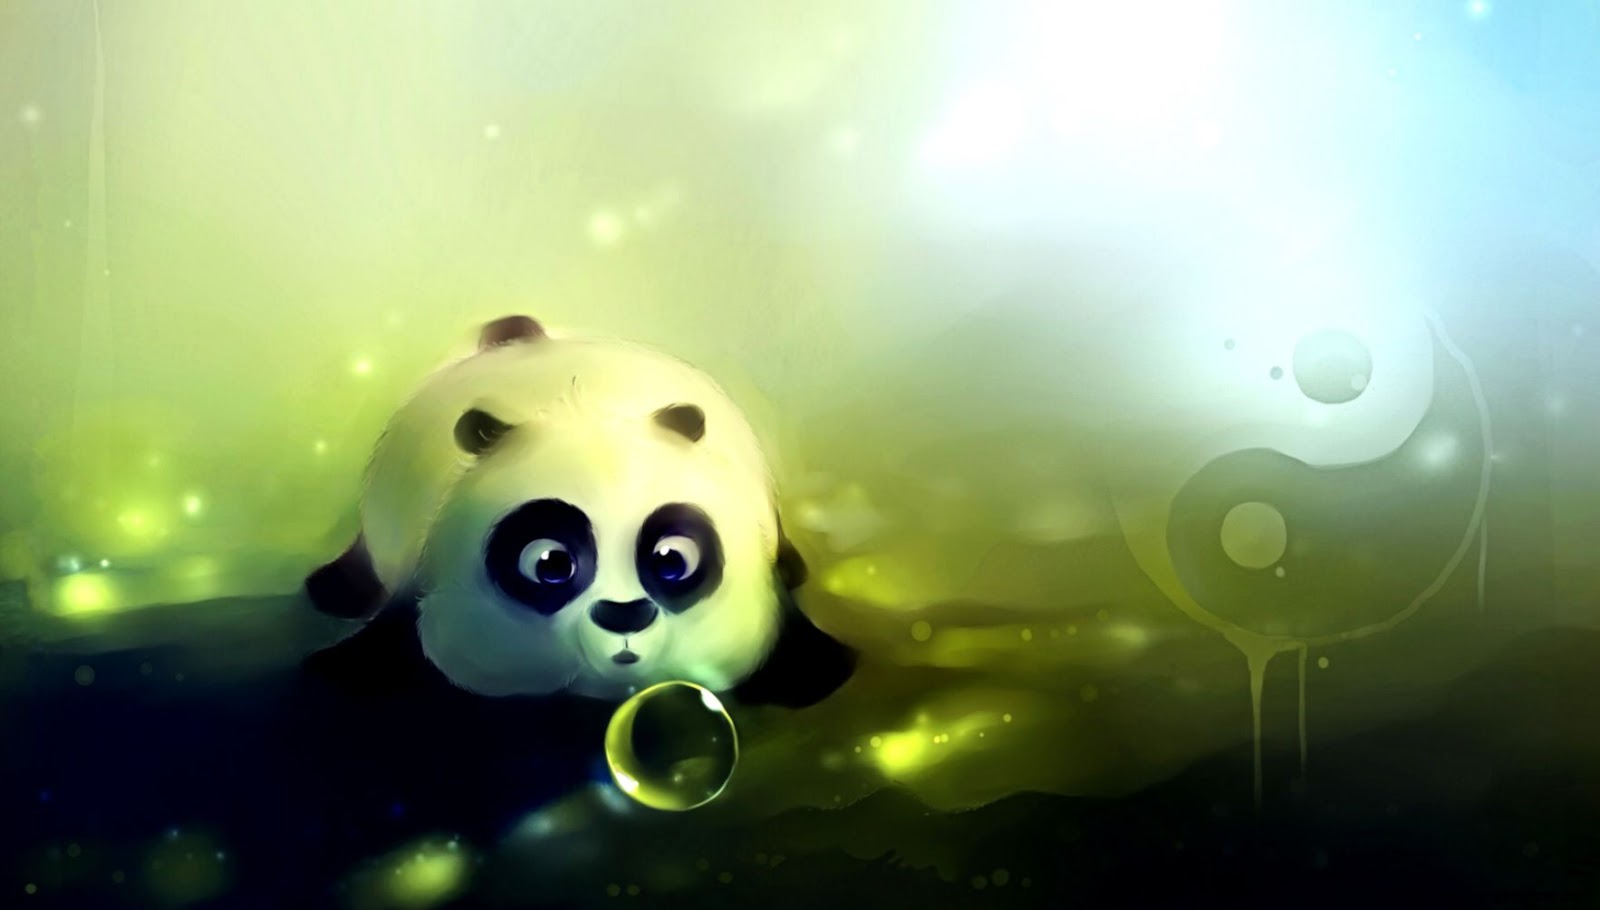 panda anime wallpaper,panda,green,sky,bear,macro photography